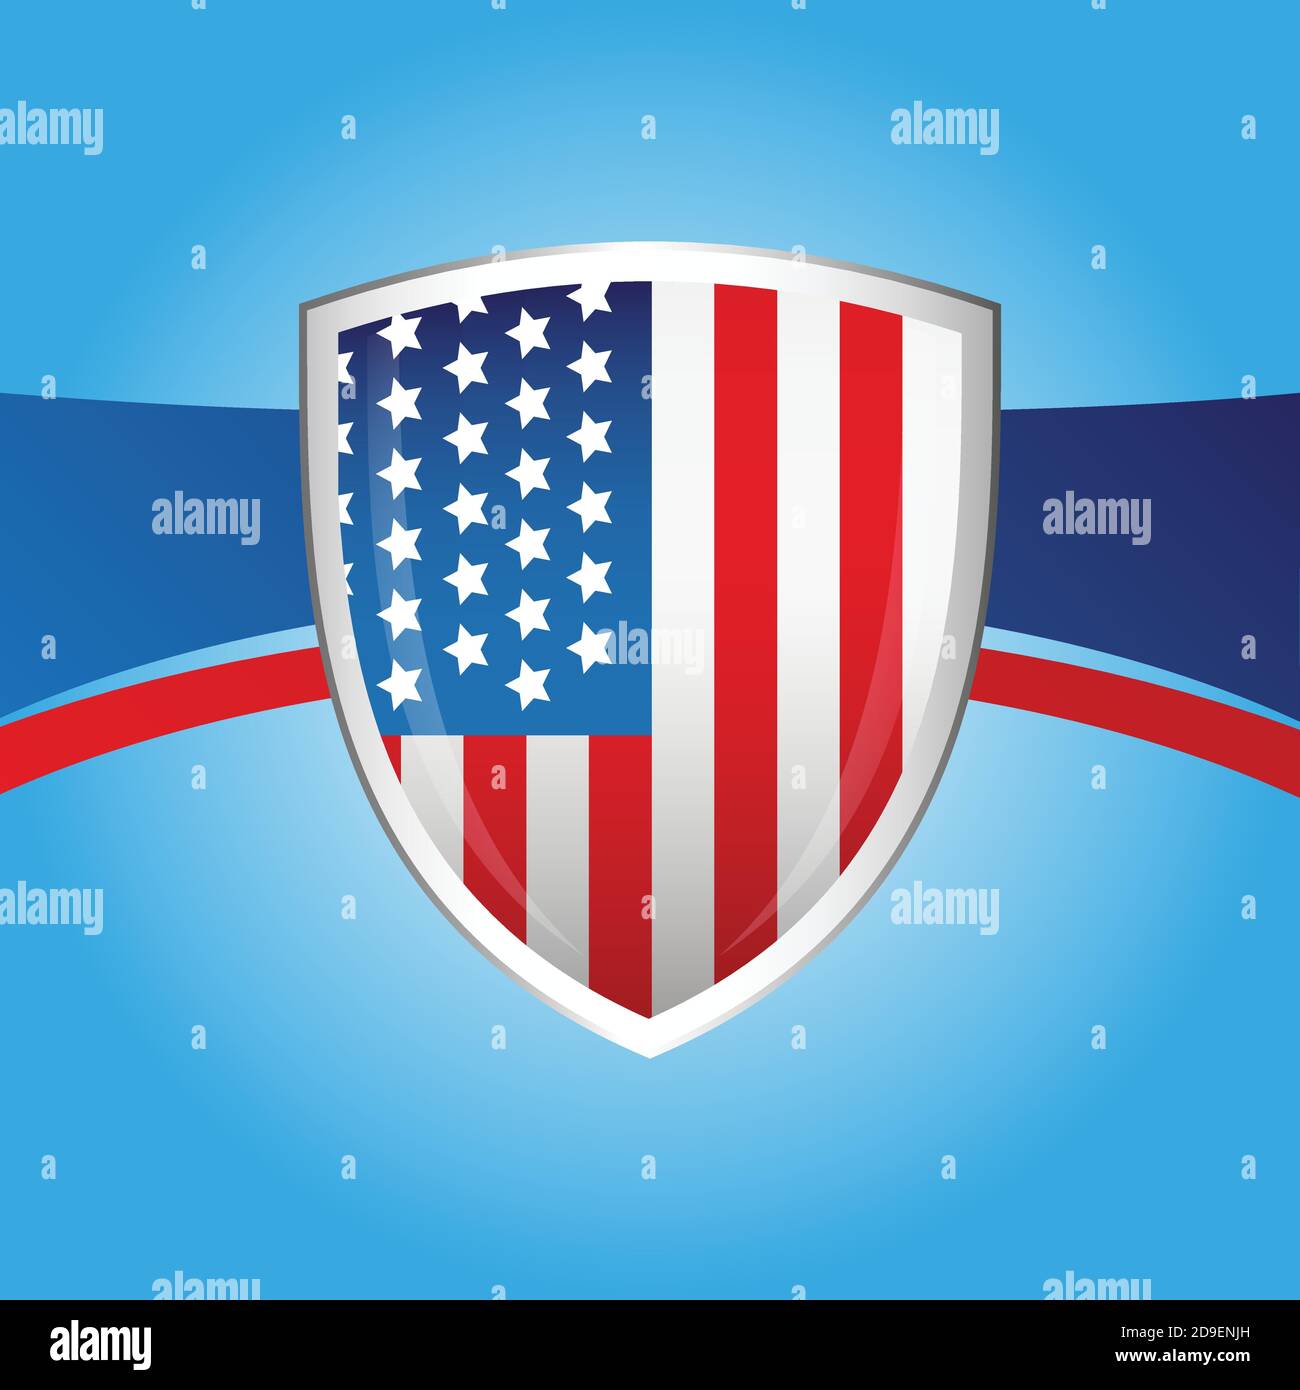 USA flag shield background Stock Vector